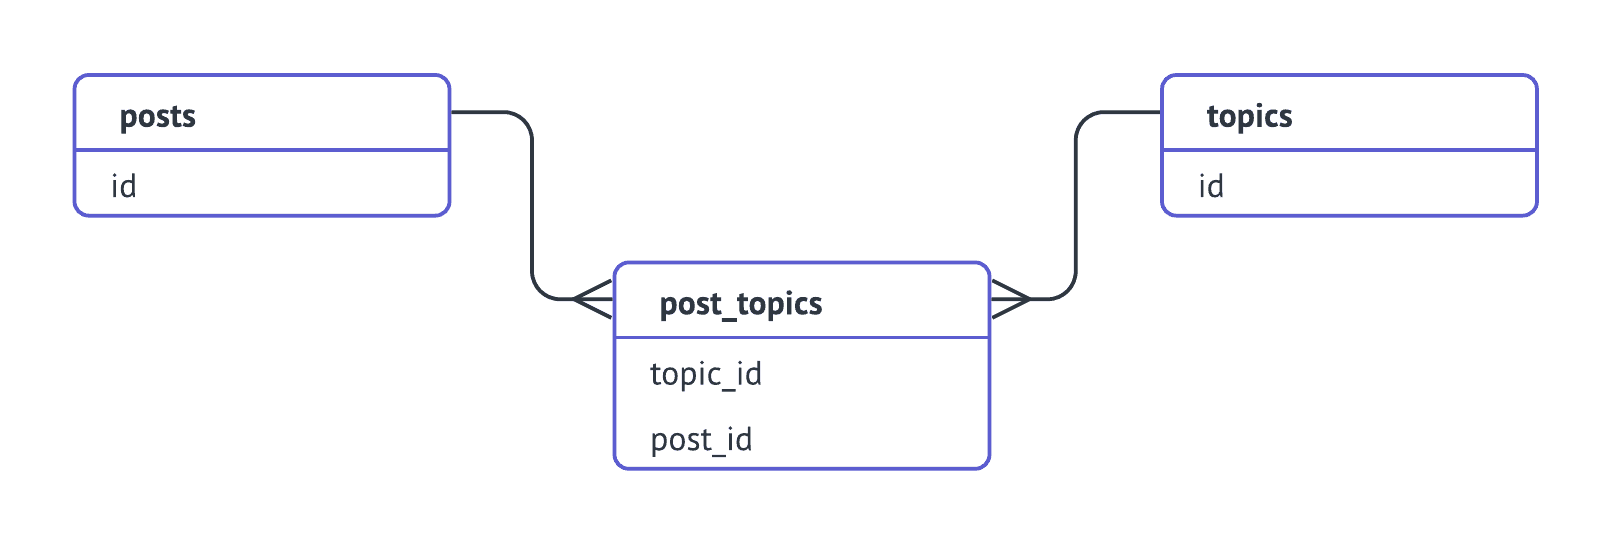 Many-to-Many Entity Diagram for posts, topics and post_topics